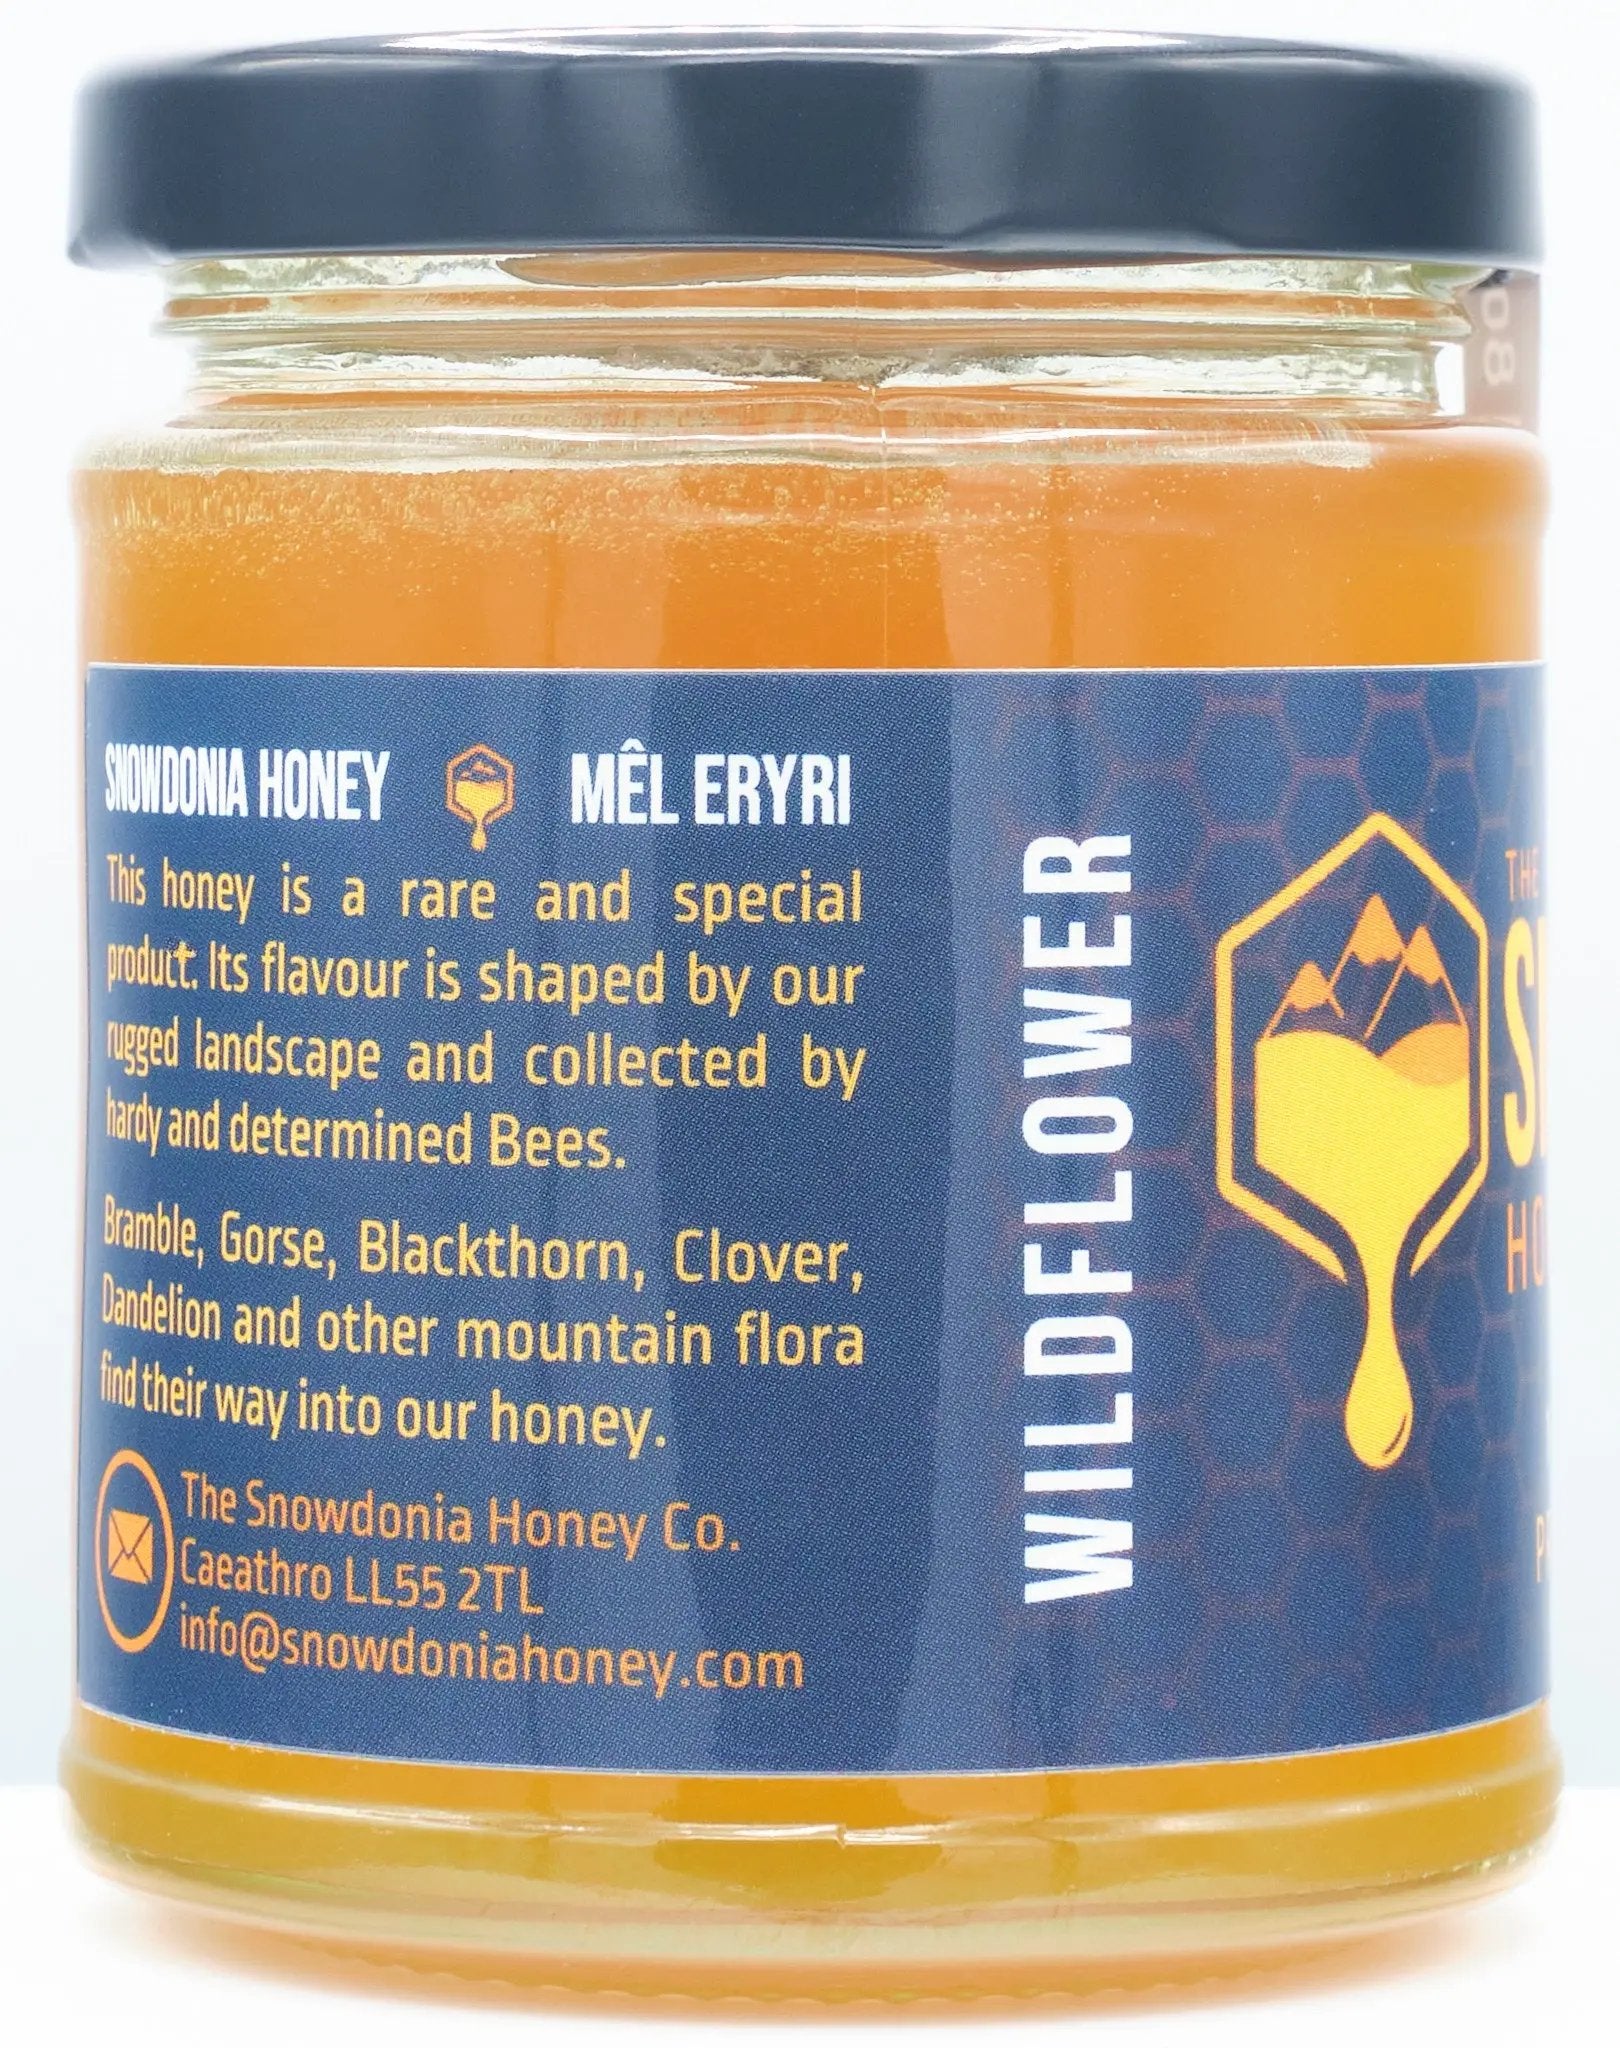 Snowdonia Welsh Wildflower Honey 227g | Great Taste Award Winner - The Snowdonia Honey Co.